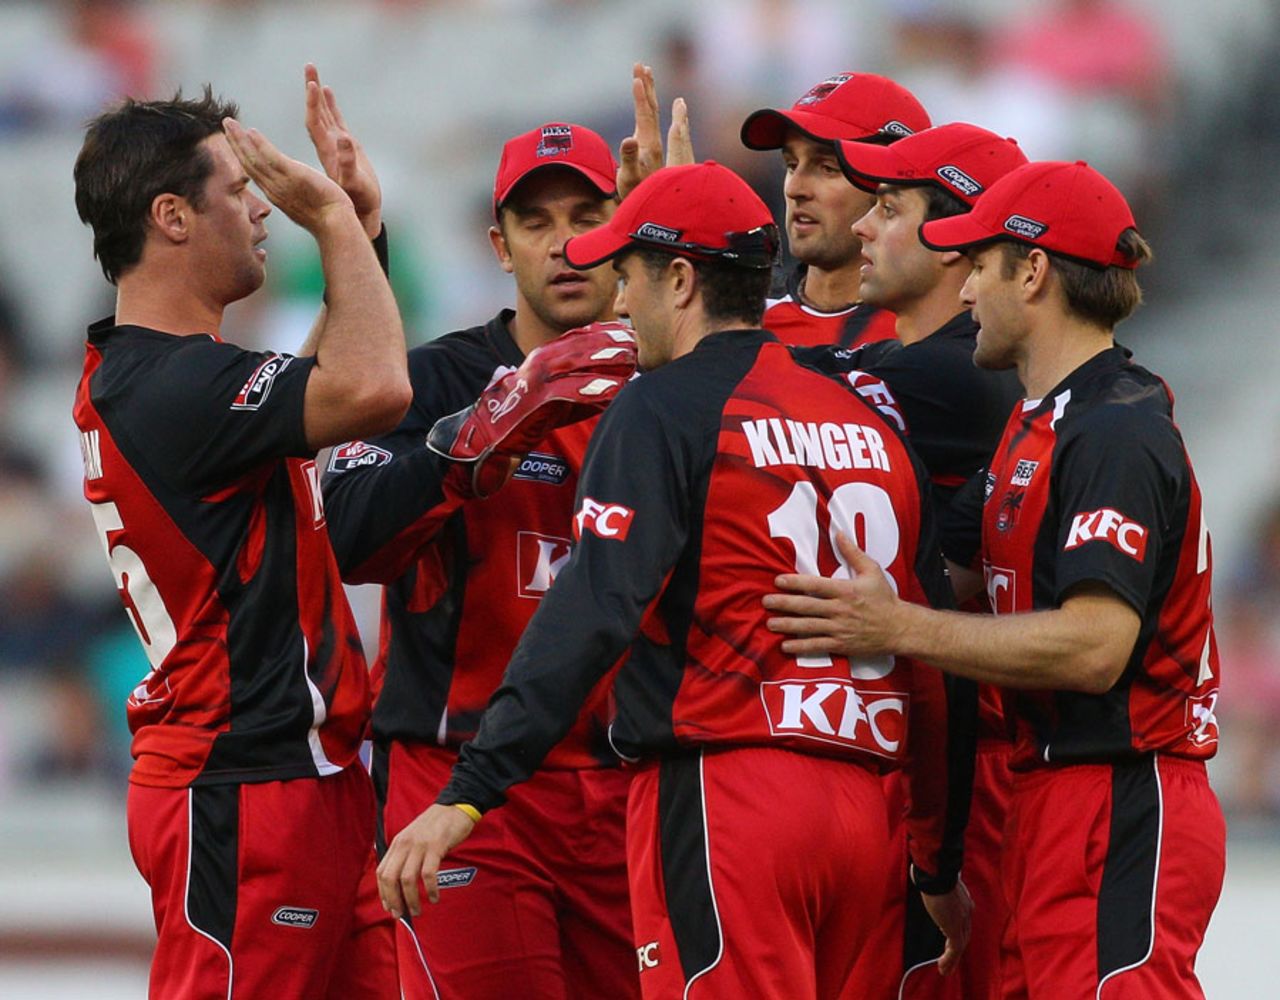 Daniel Christian celebrates a wicket with his team-mates, Victoria v South Australia, Big Bash, Melbourne, January 28, 2011